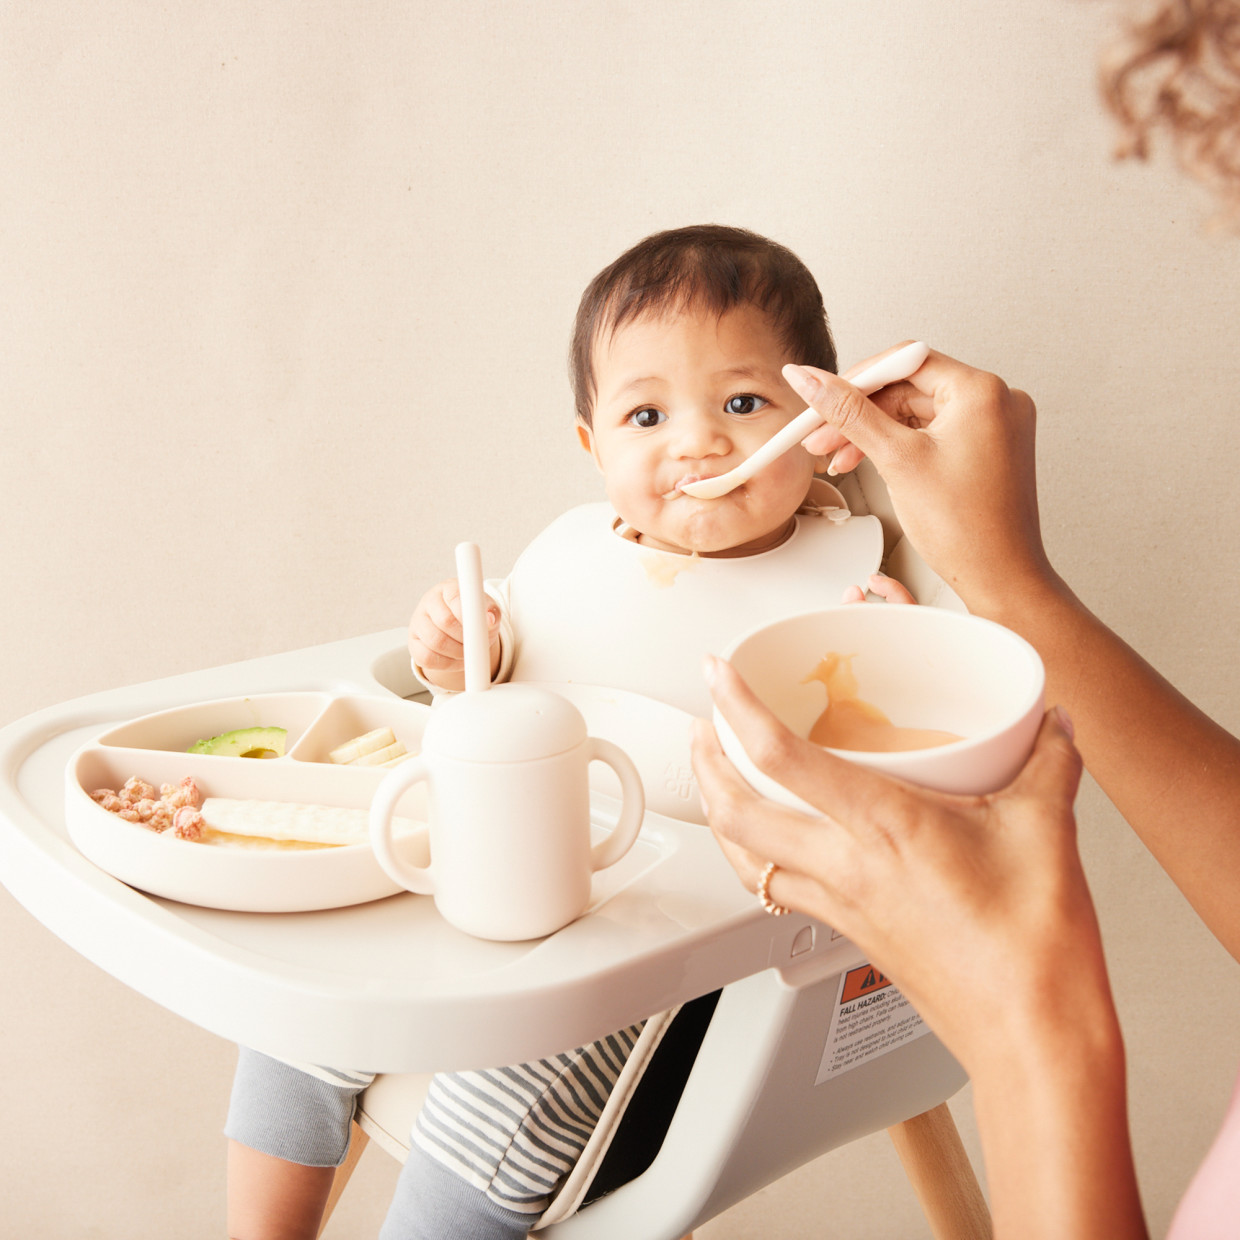 AEIOU Infant Feeding Spoon (4 Pack) - Multi Color.